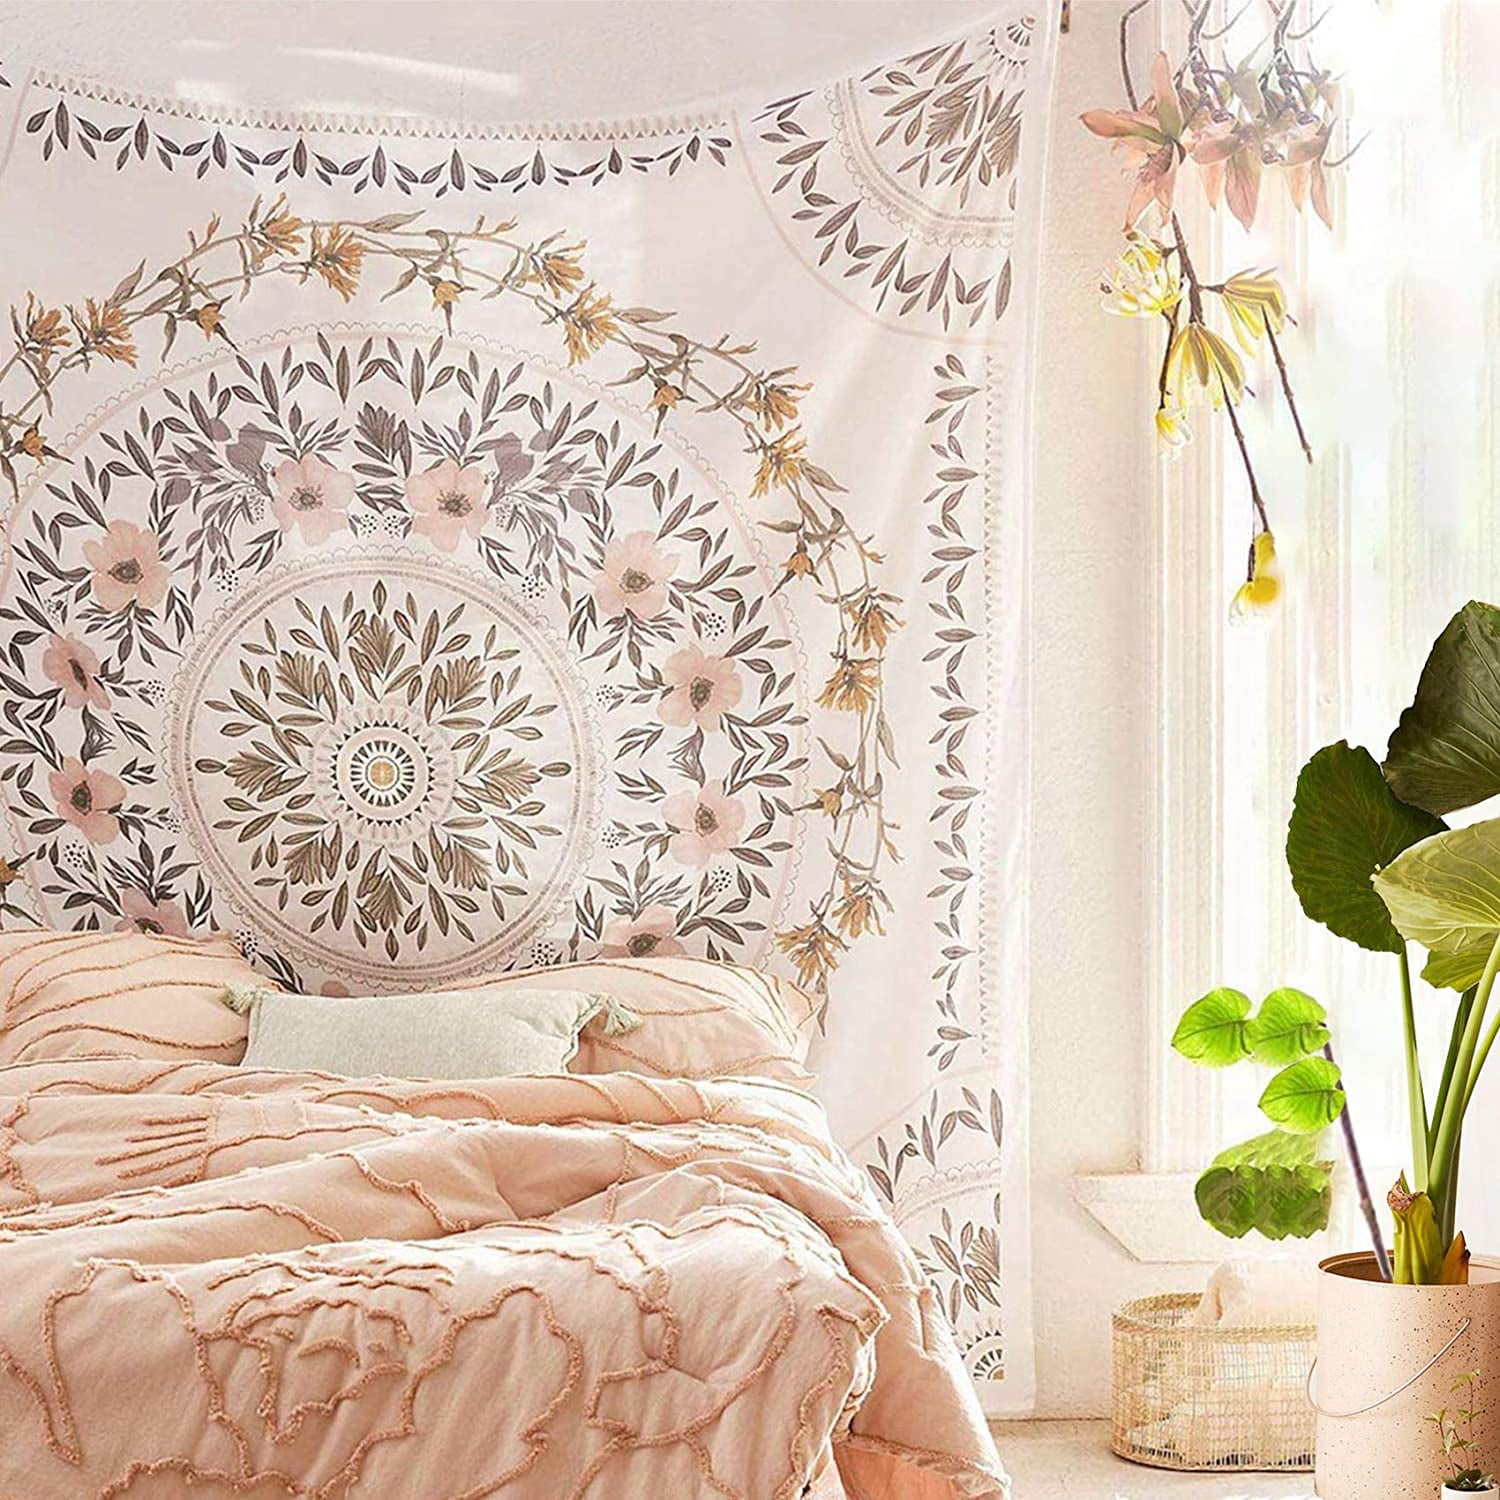 Large Bedroom Dorm Decor, Indian Wall Tapestry Mandala Wall Hanging Bed Sheets 